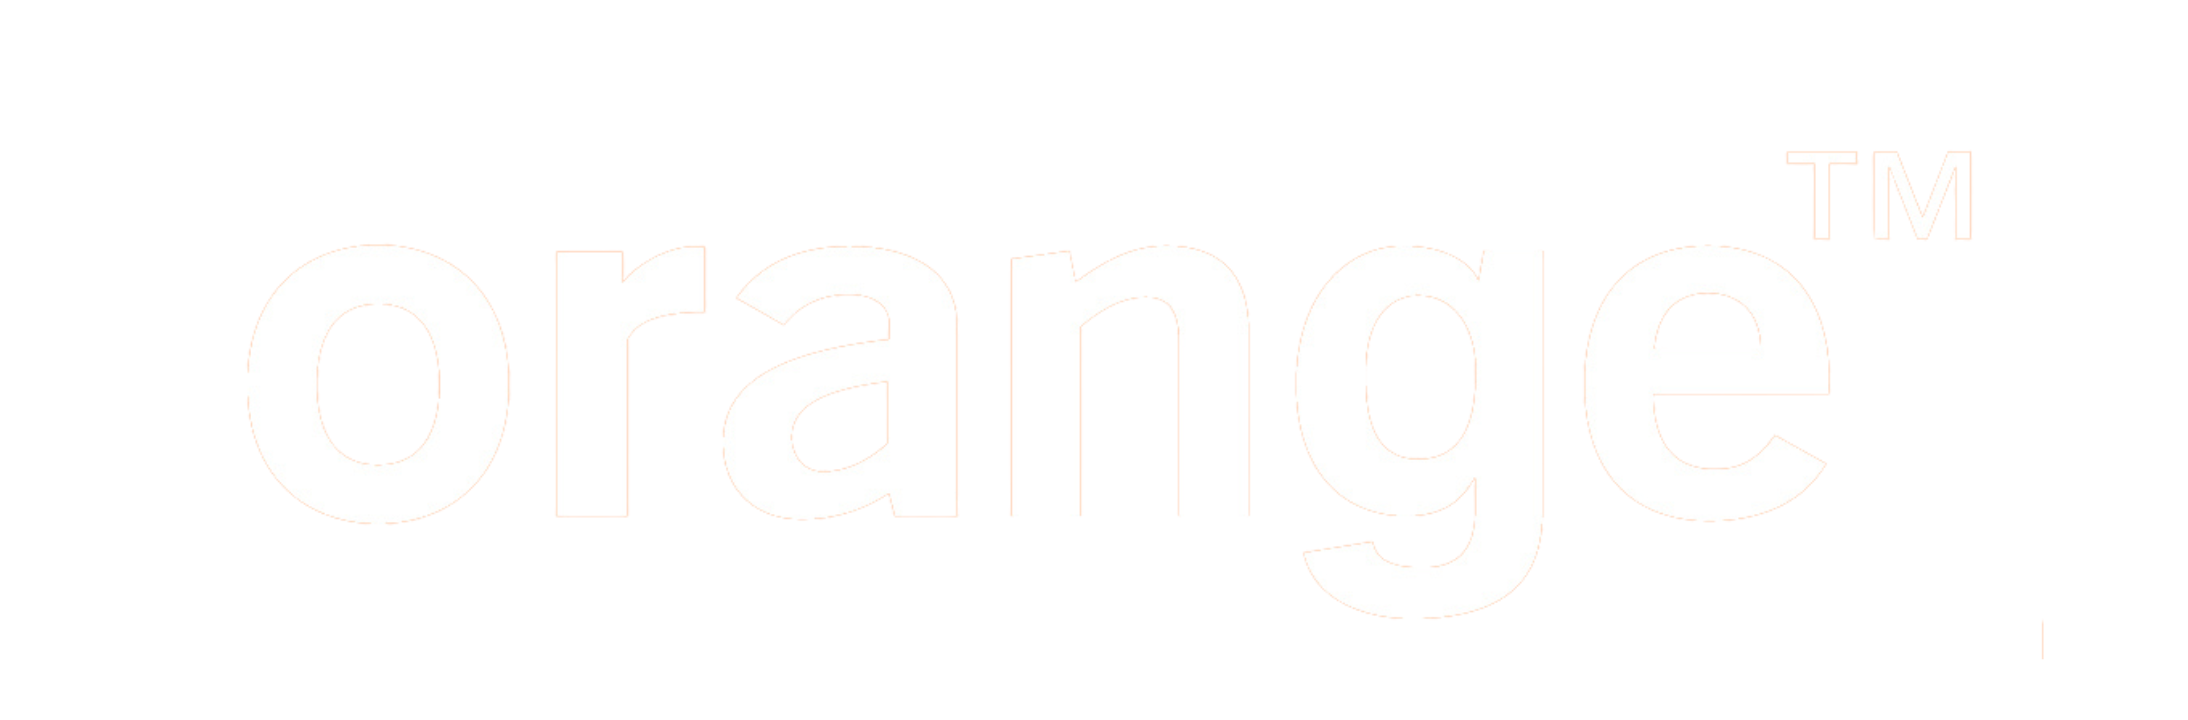 Orange brand logo with trademark symbol on a black background.